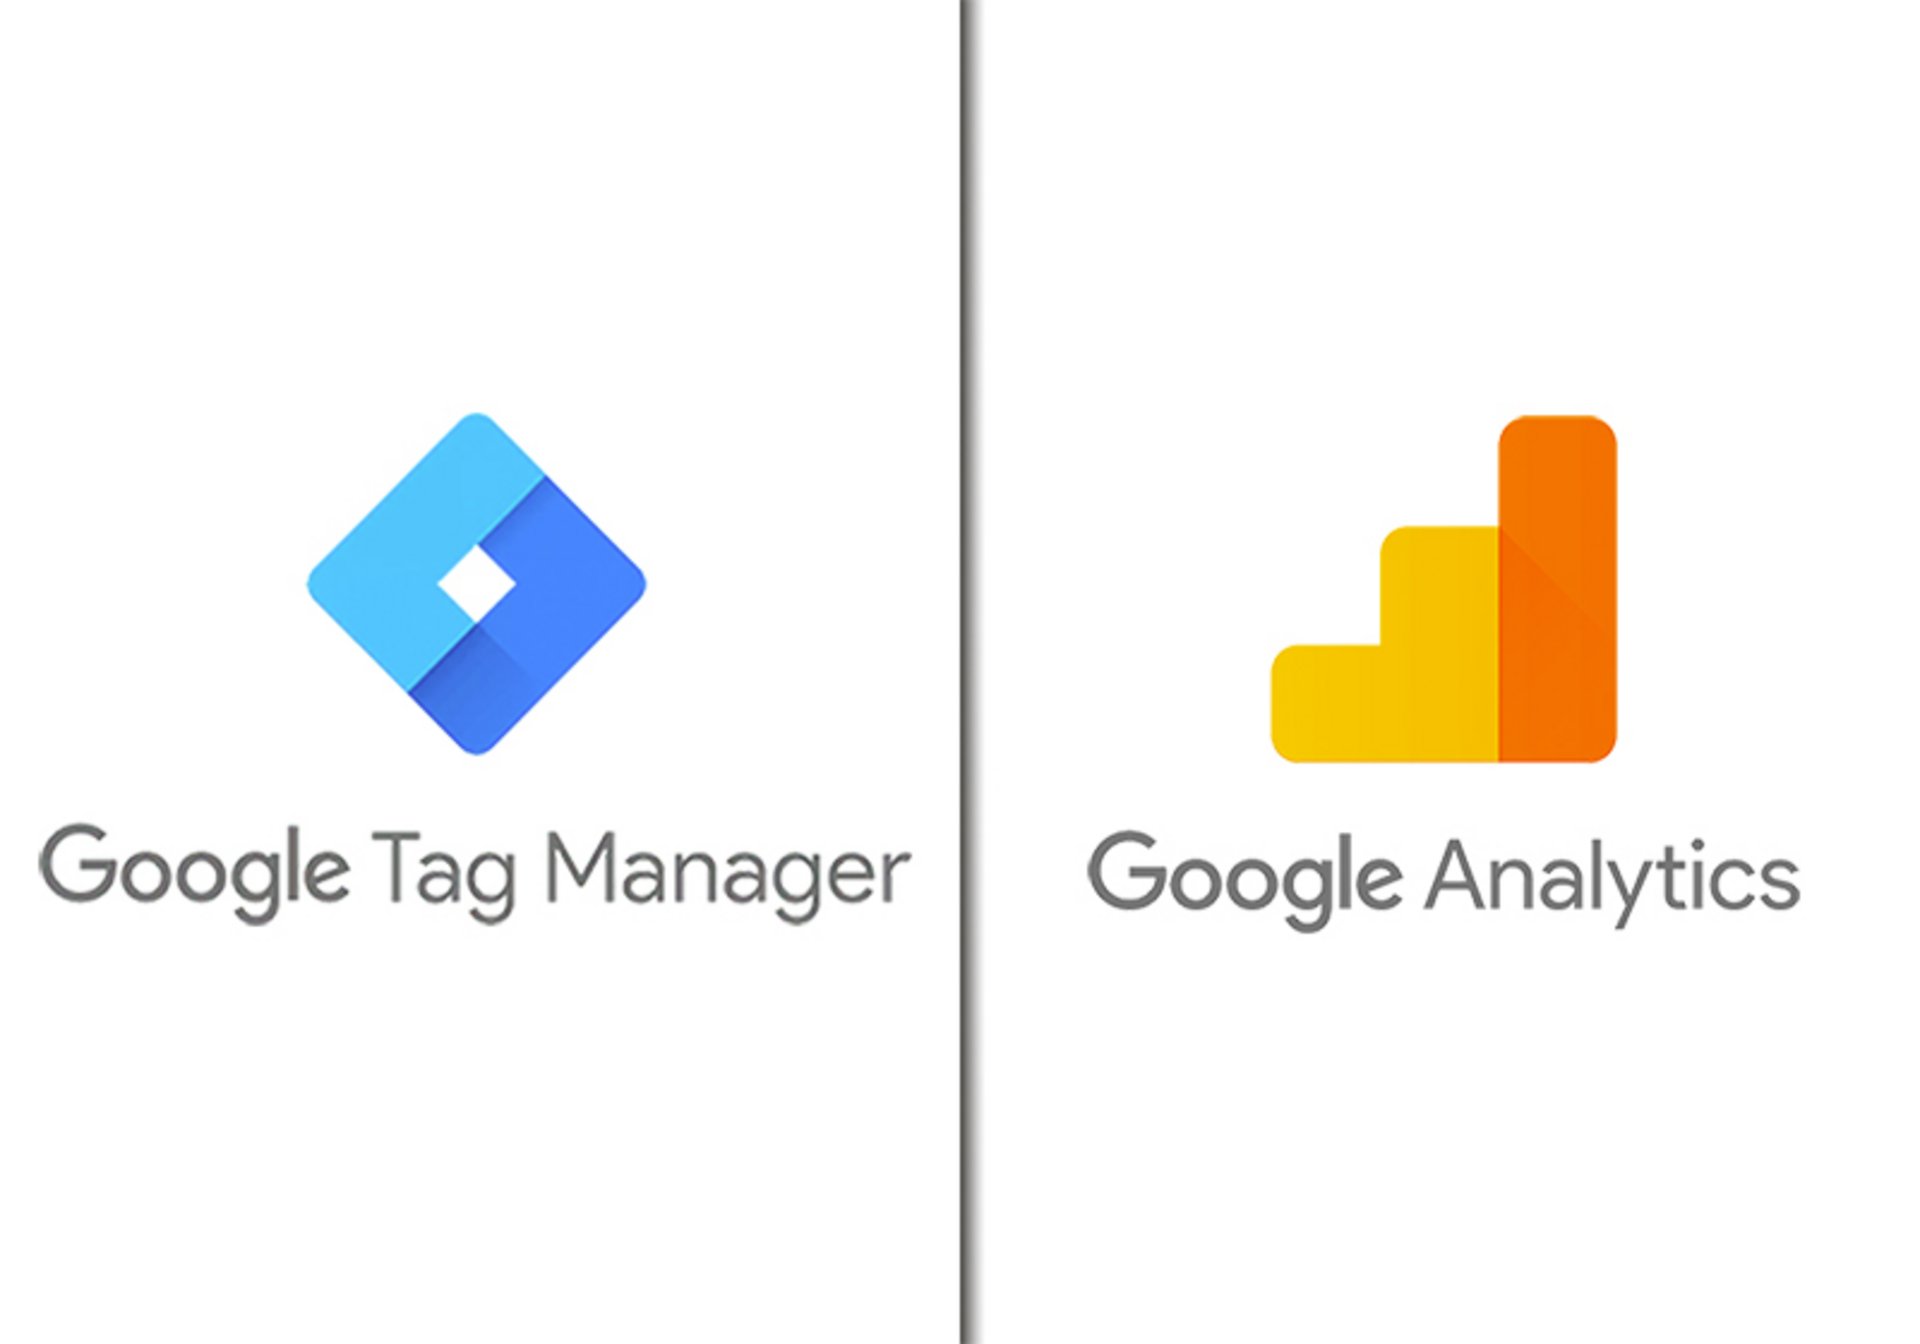 Tag Manager vs Analytics